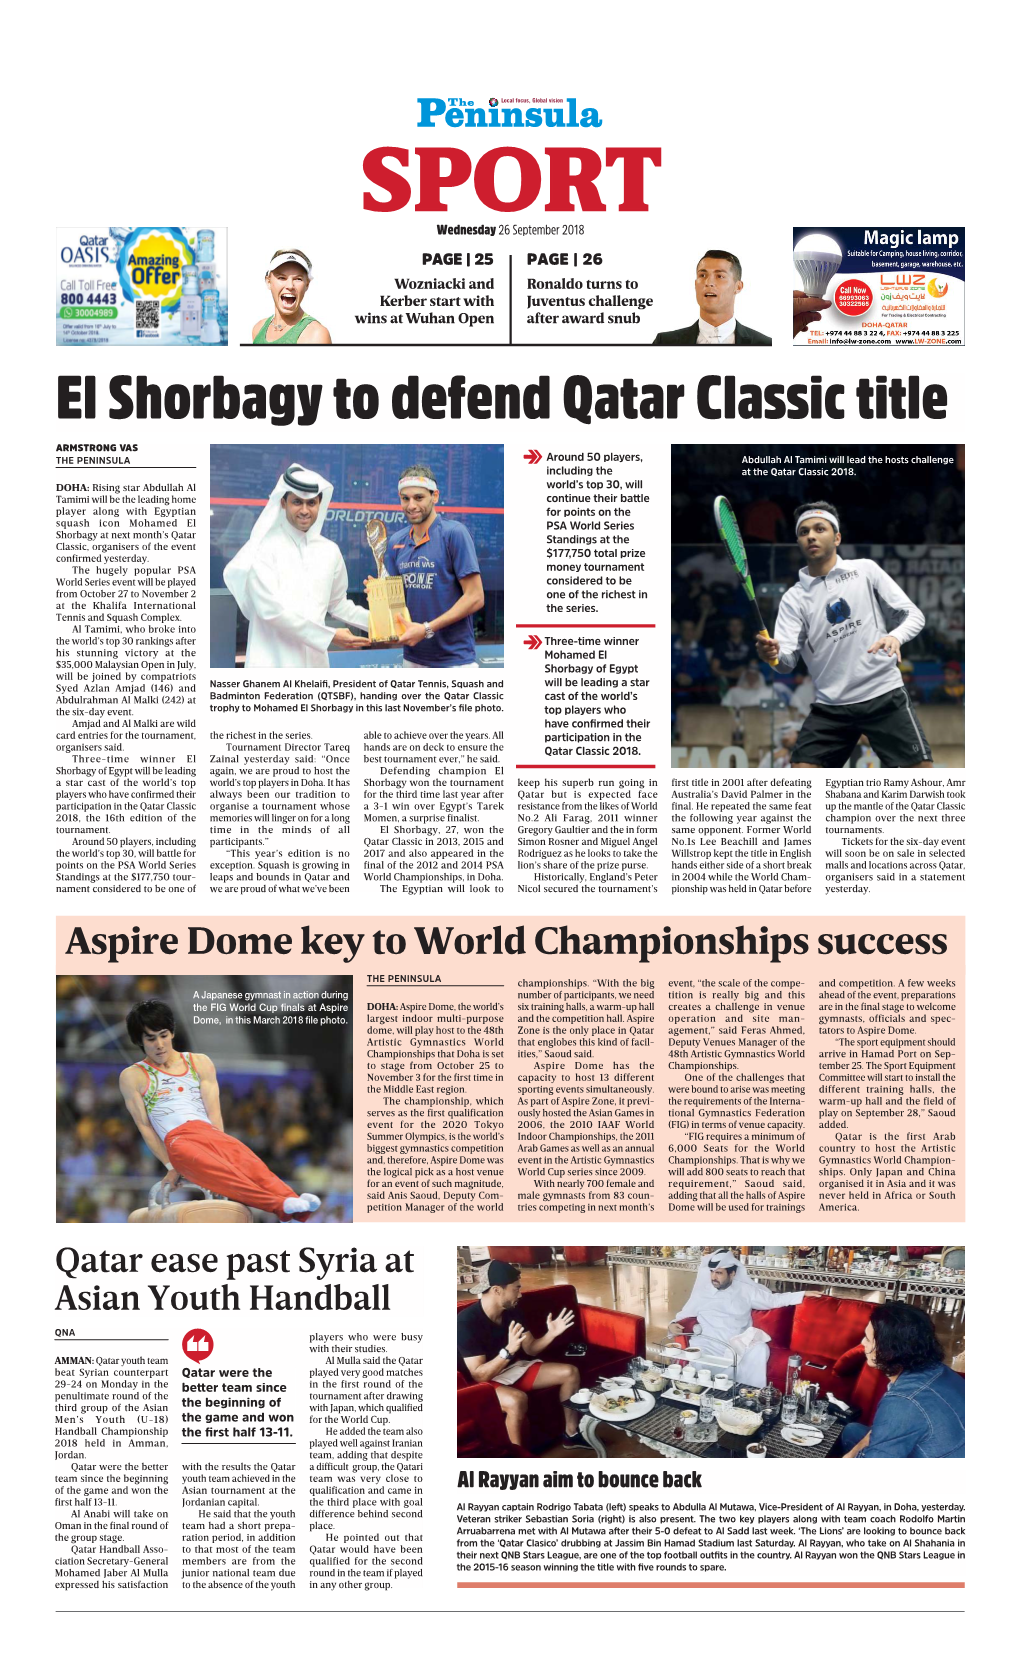 El Shorbagy to Defend Qatar Classic Title